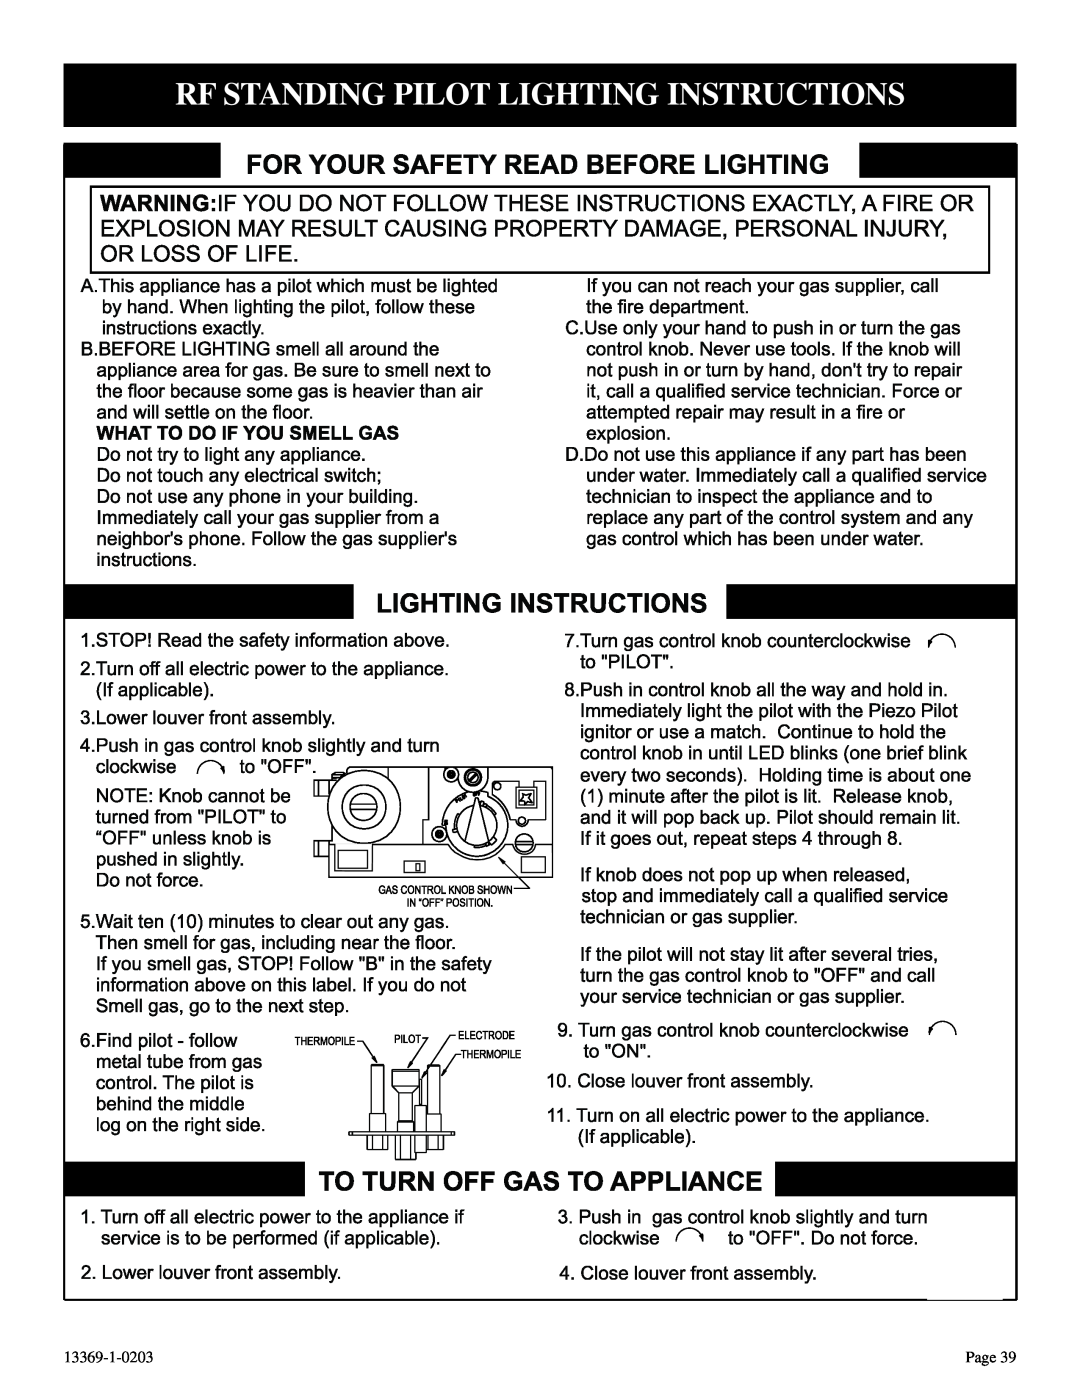 DVS 30-2 installation instructions Rf Standing Pilot Lighting Instructions, 13369-1-0203, Page 